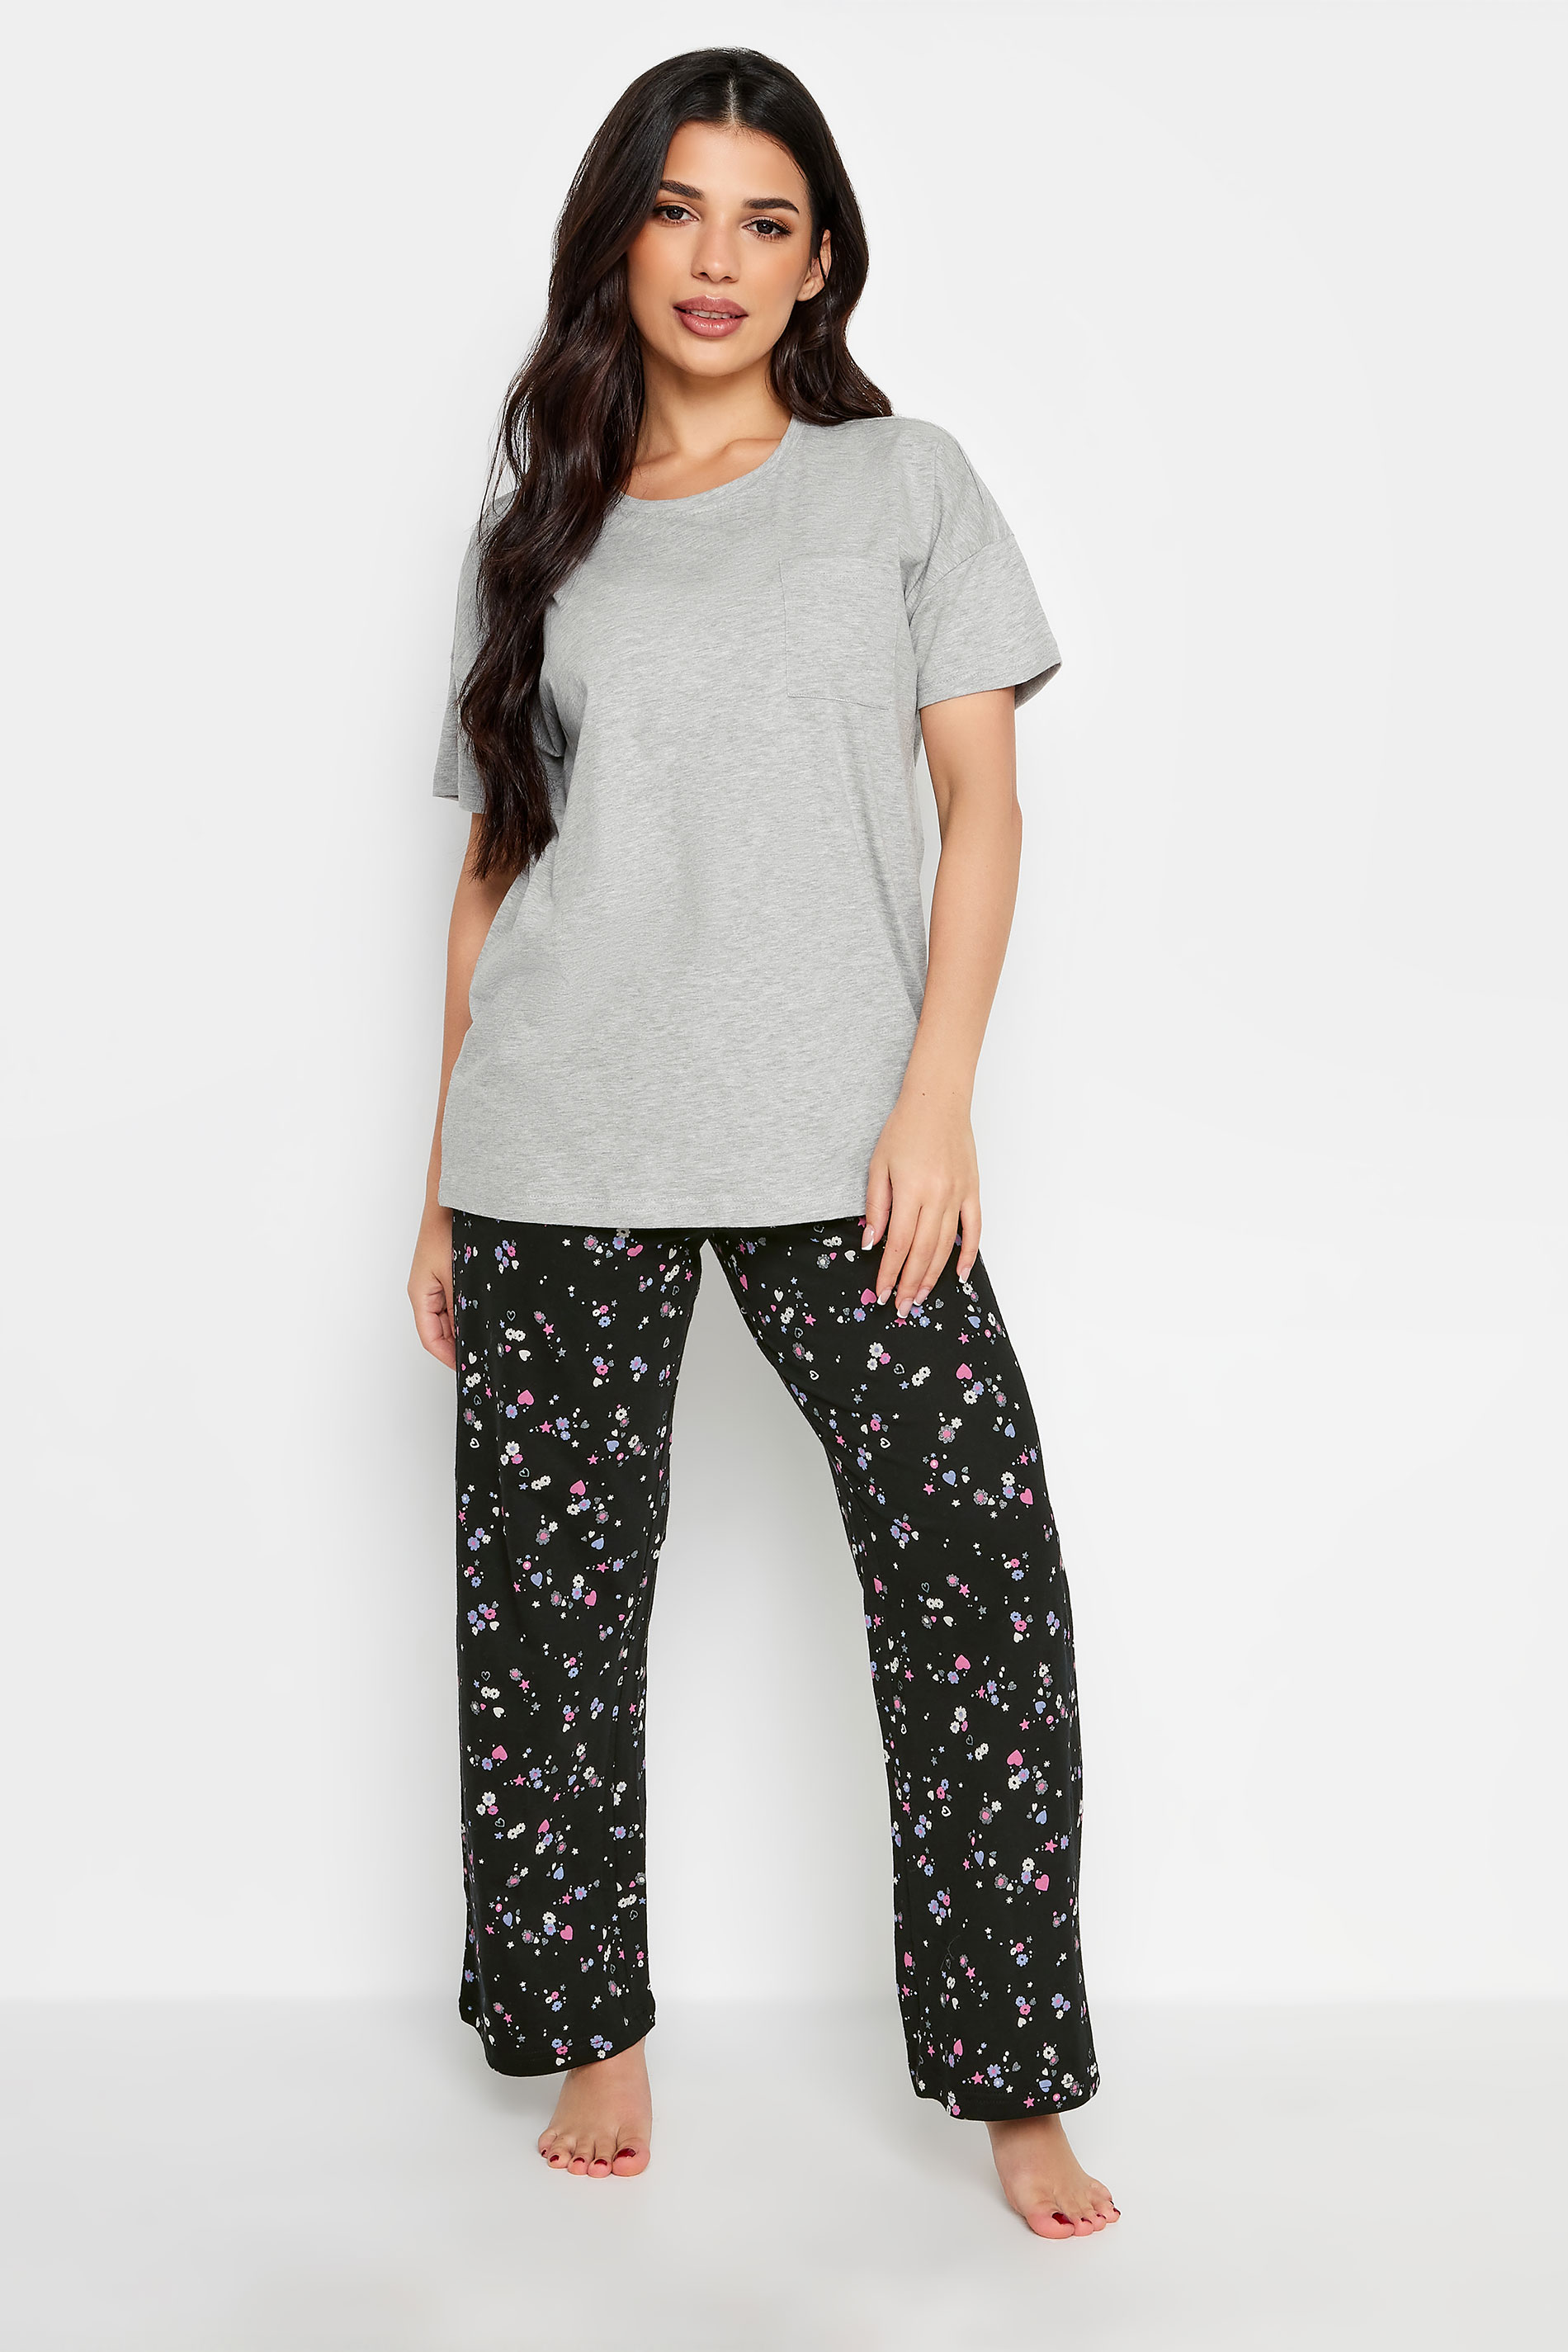 PixieGirl Petite Womens Grey Ditsy Floral Print Wide Leg Pyjama Set | PixieGirl 2